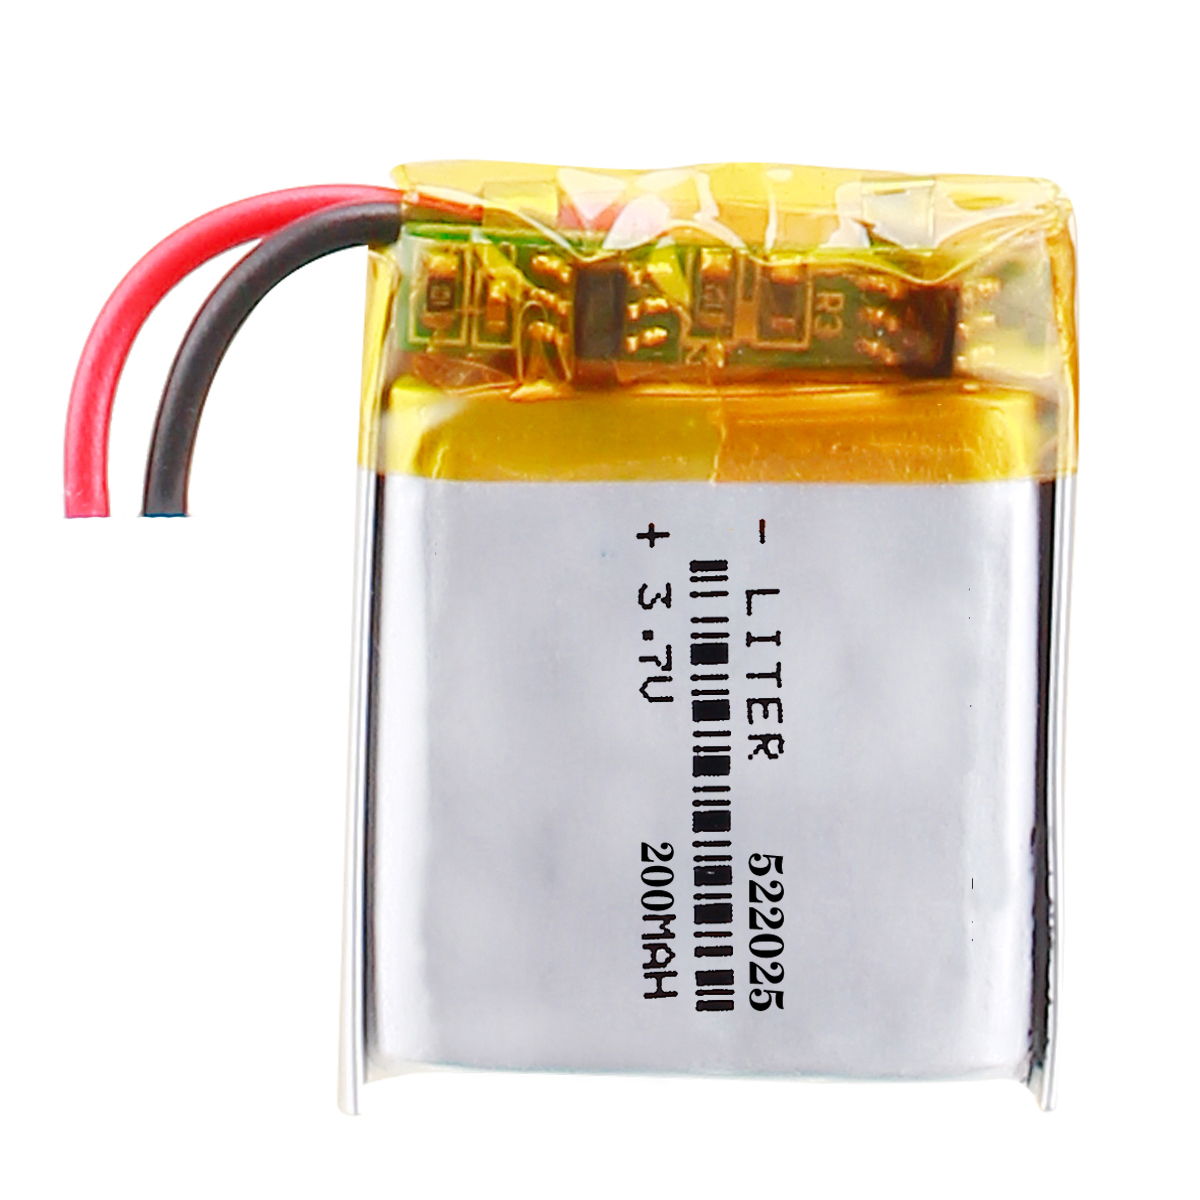 LiPo Battery 522025 3.7V 200mAh 100pcs